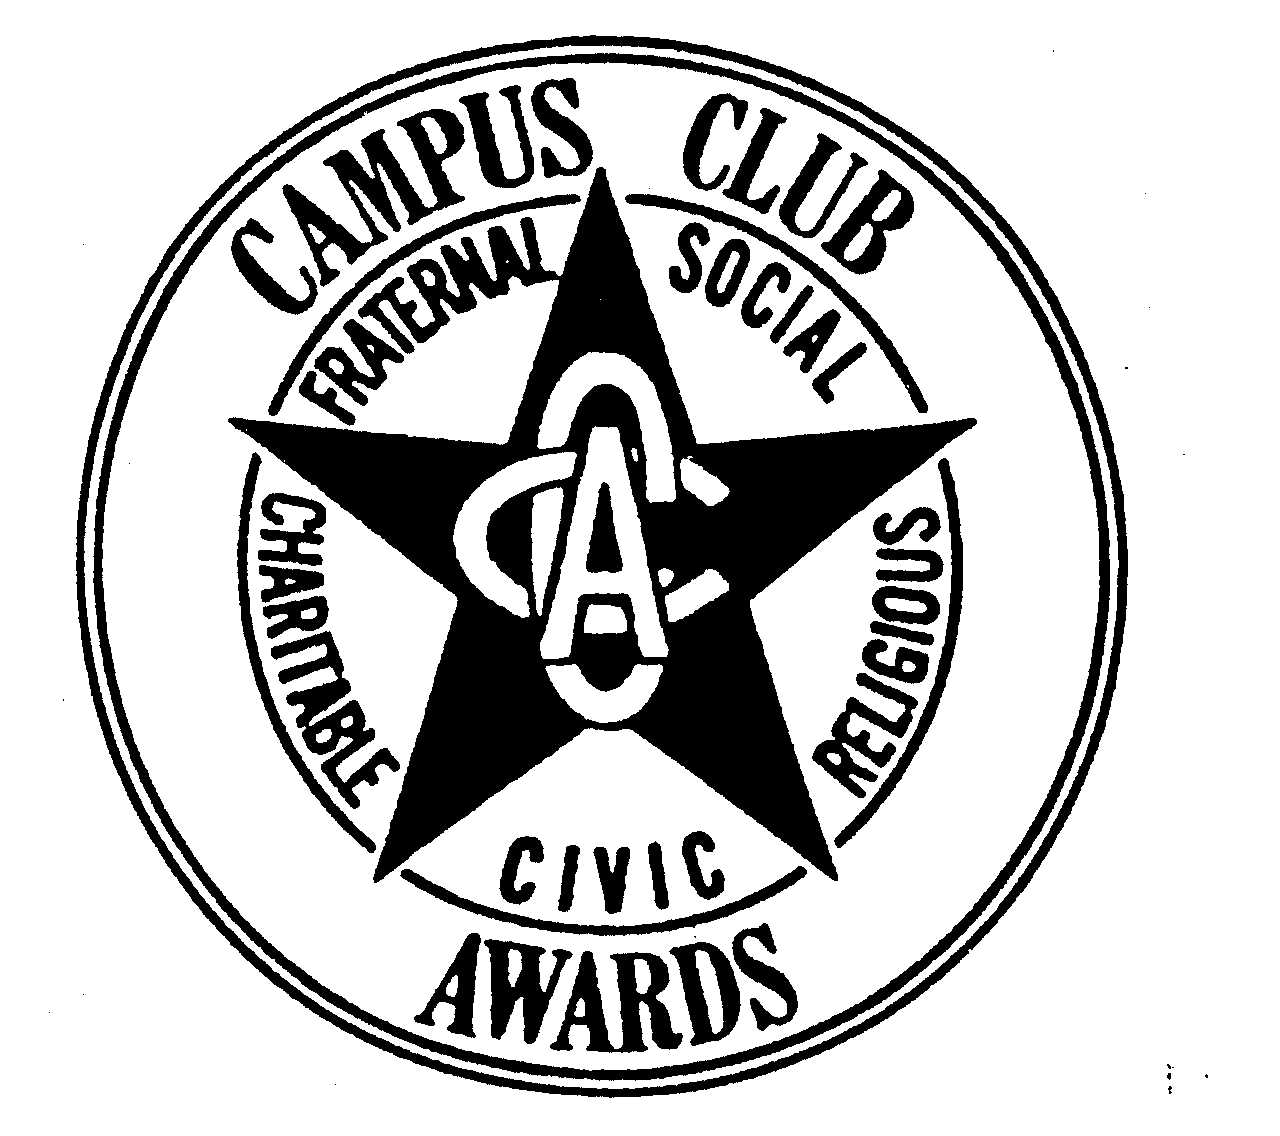  CCA CAMPUS CLUB AWARDS FRATERNAL SOCIALRELIGIOUS CIVIC CHARITABLE